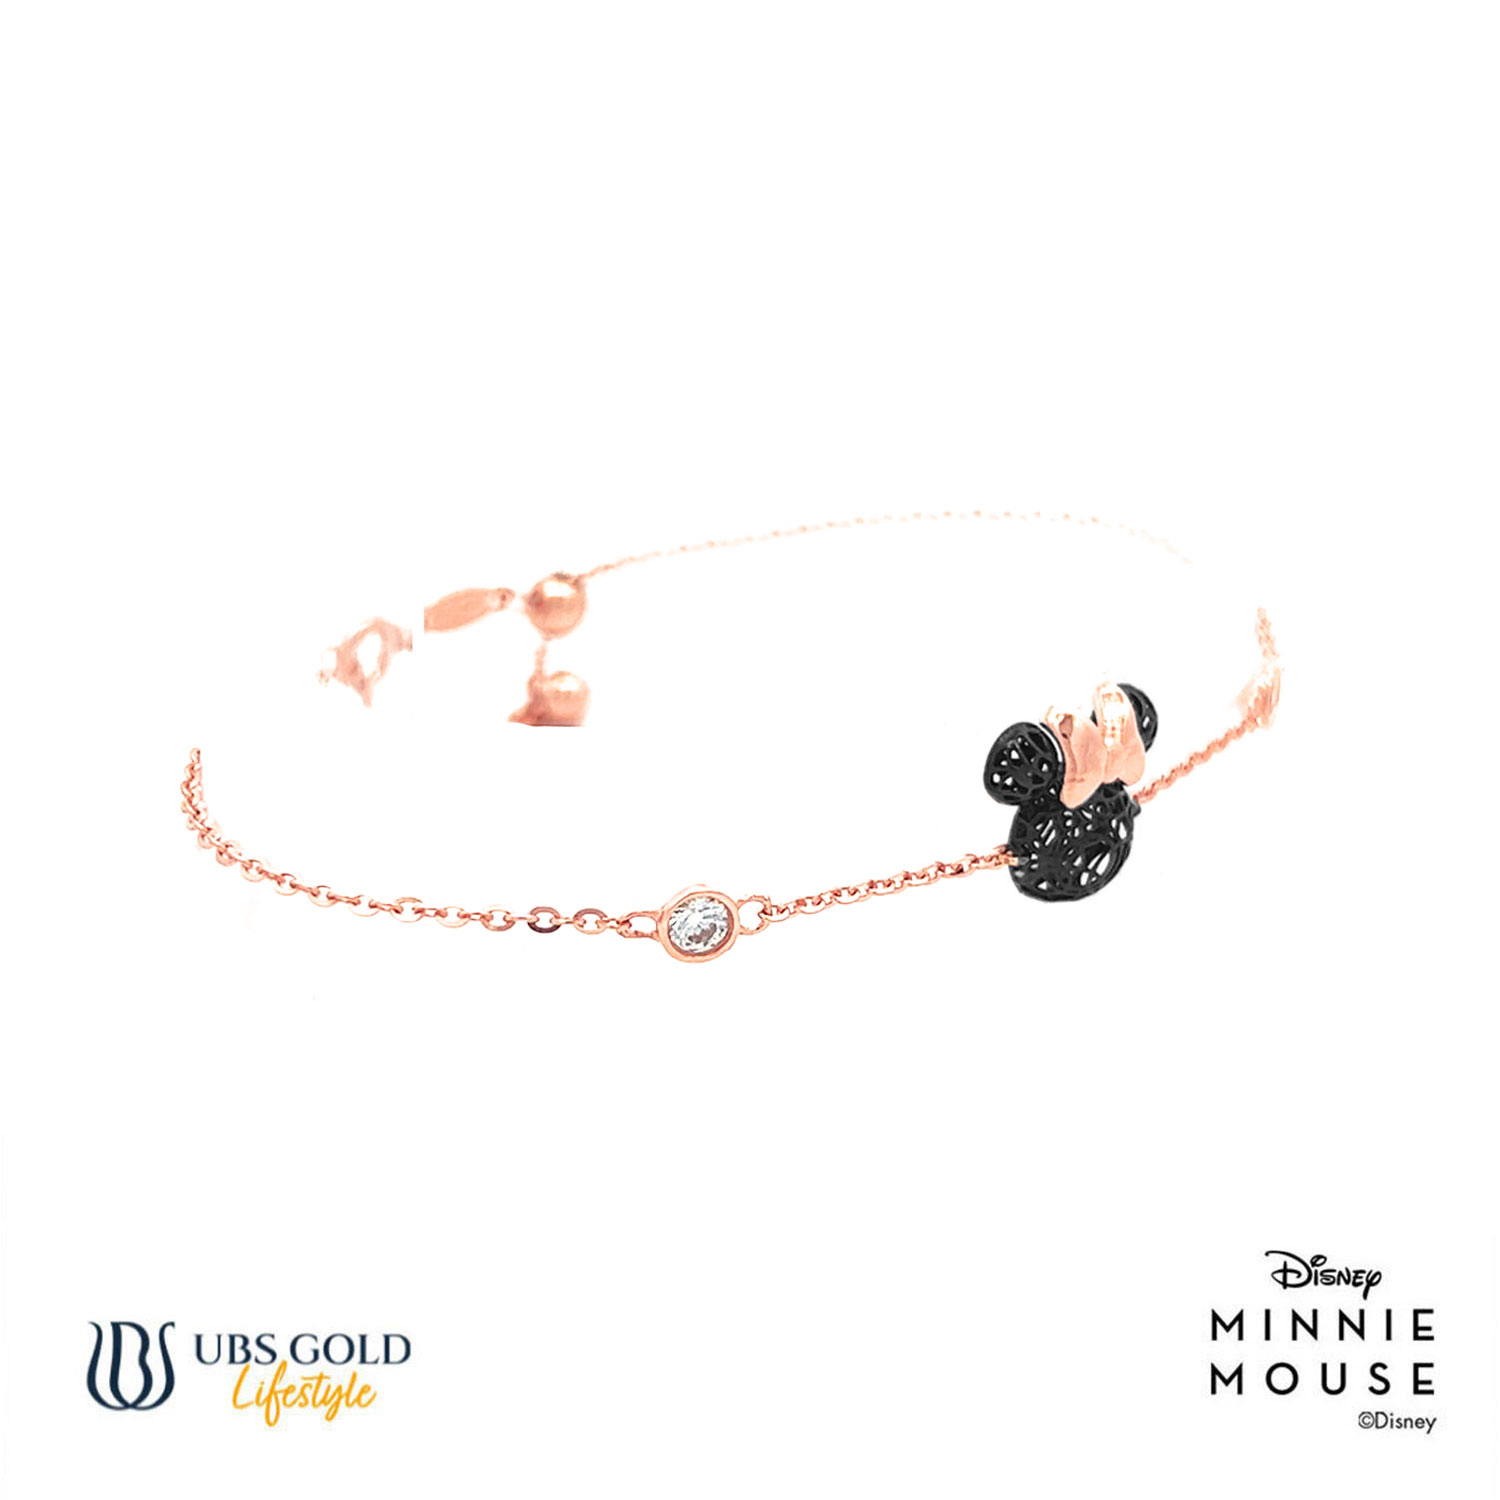 UBS Gold Gelang Emas Disney Minnie Mouse - Kgy0104 - 17K